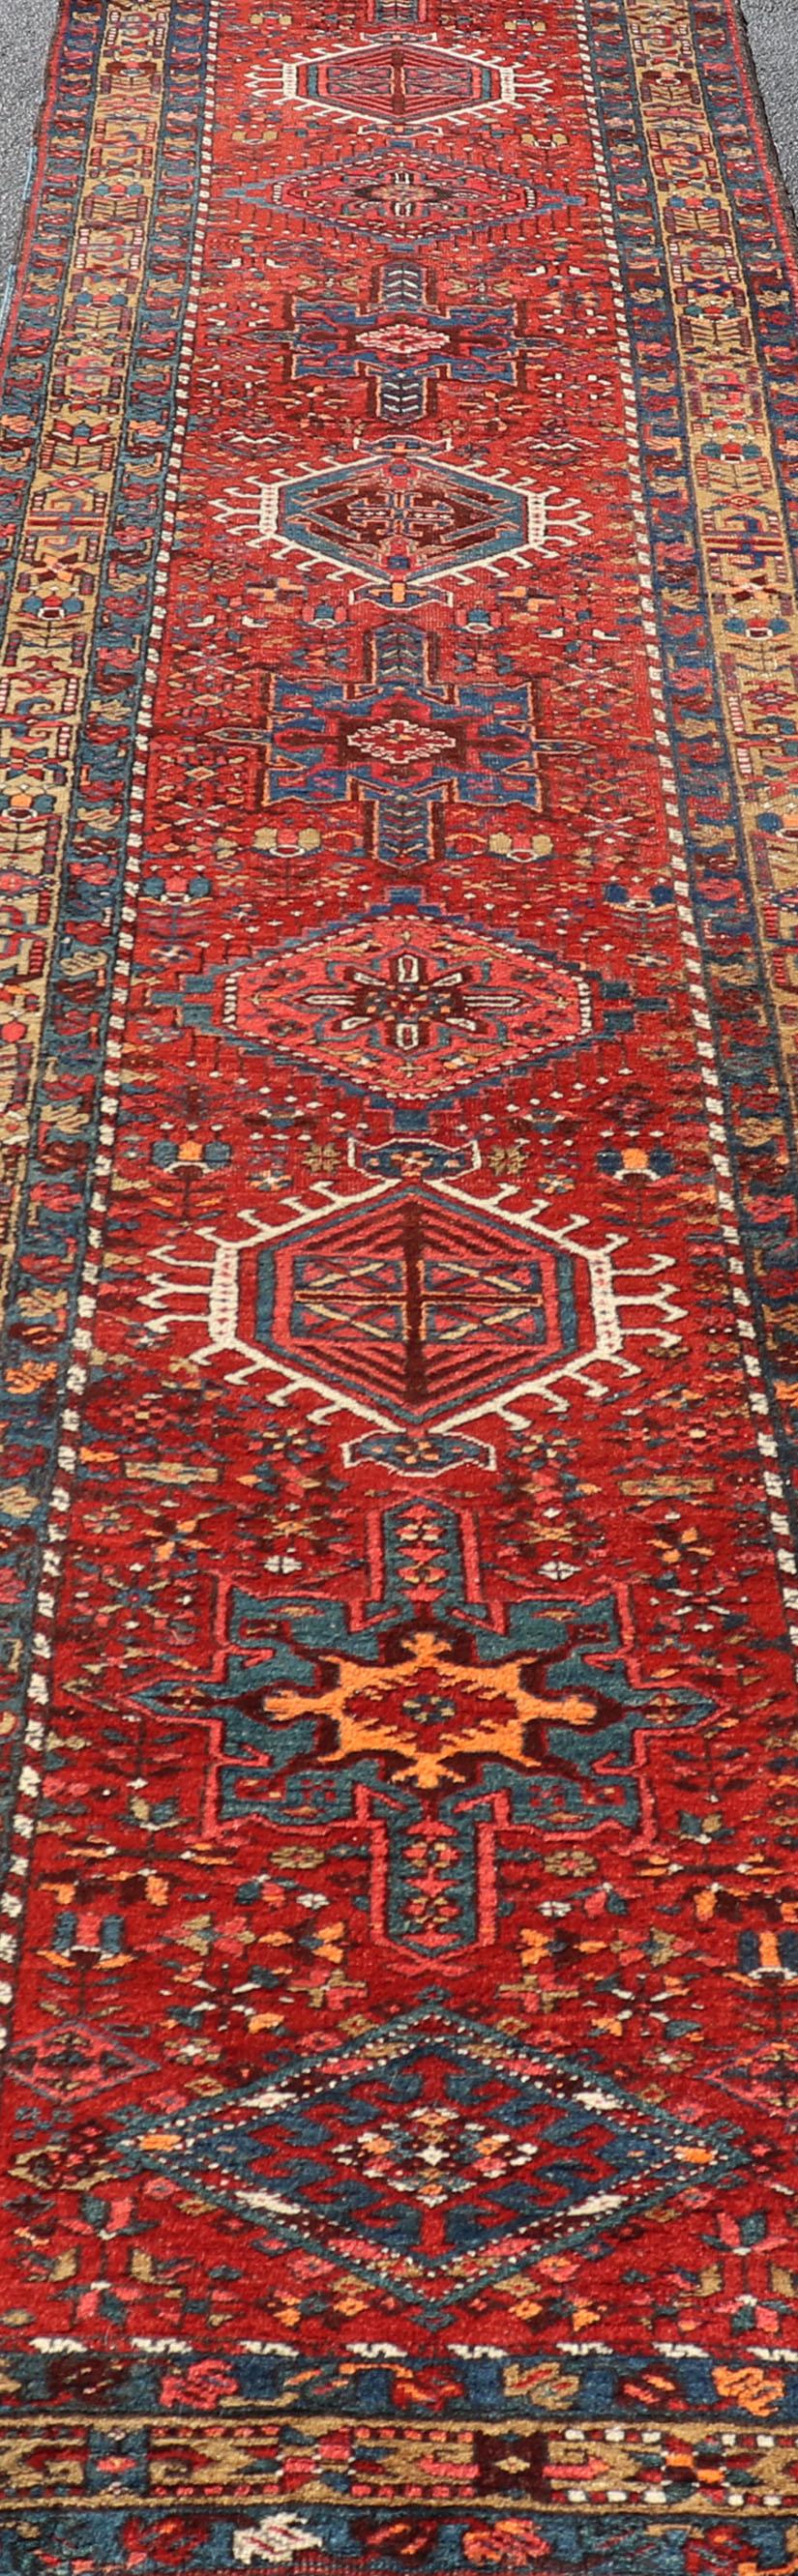 Wool Antique Geometric Persian Long Heriz Runner in Red, Blue, Yellow, Teal, Orange For Sale